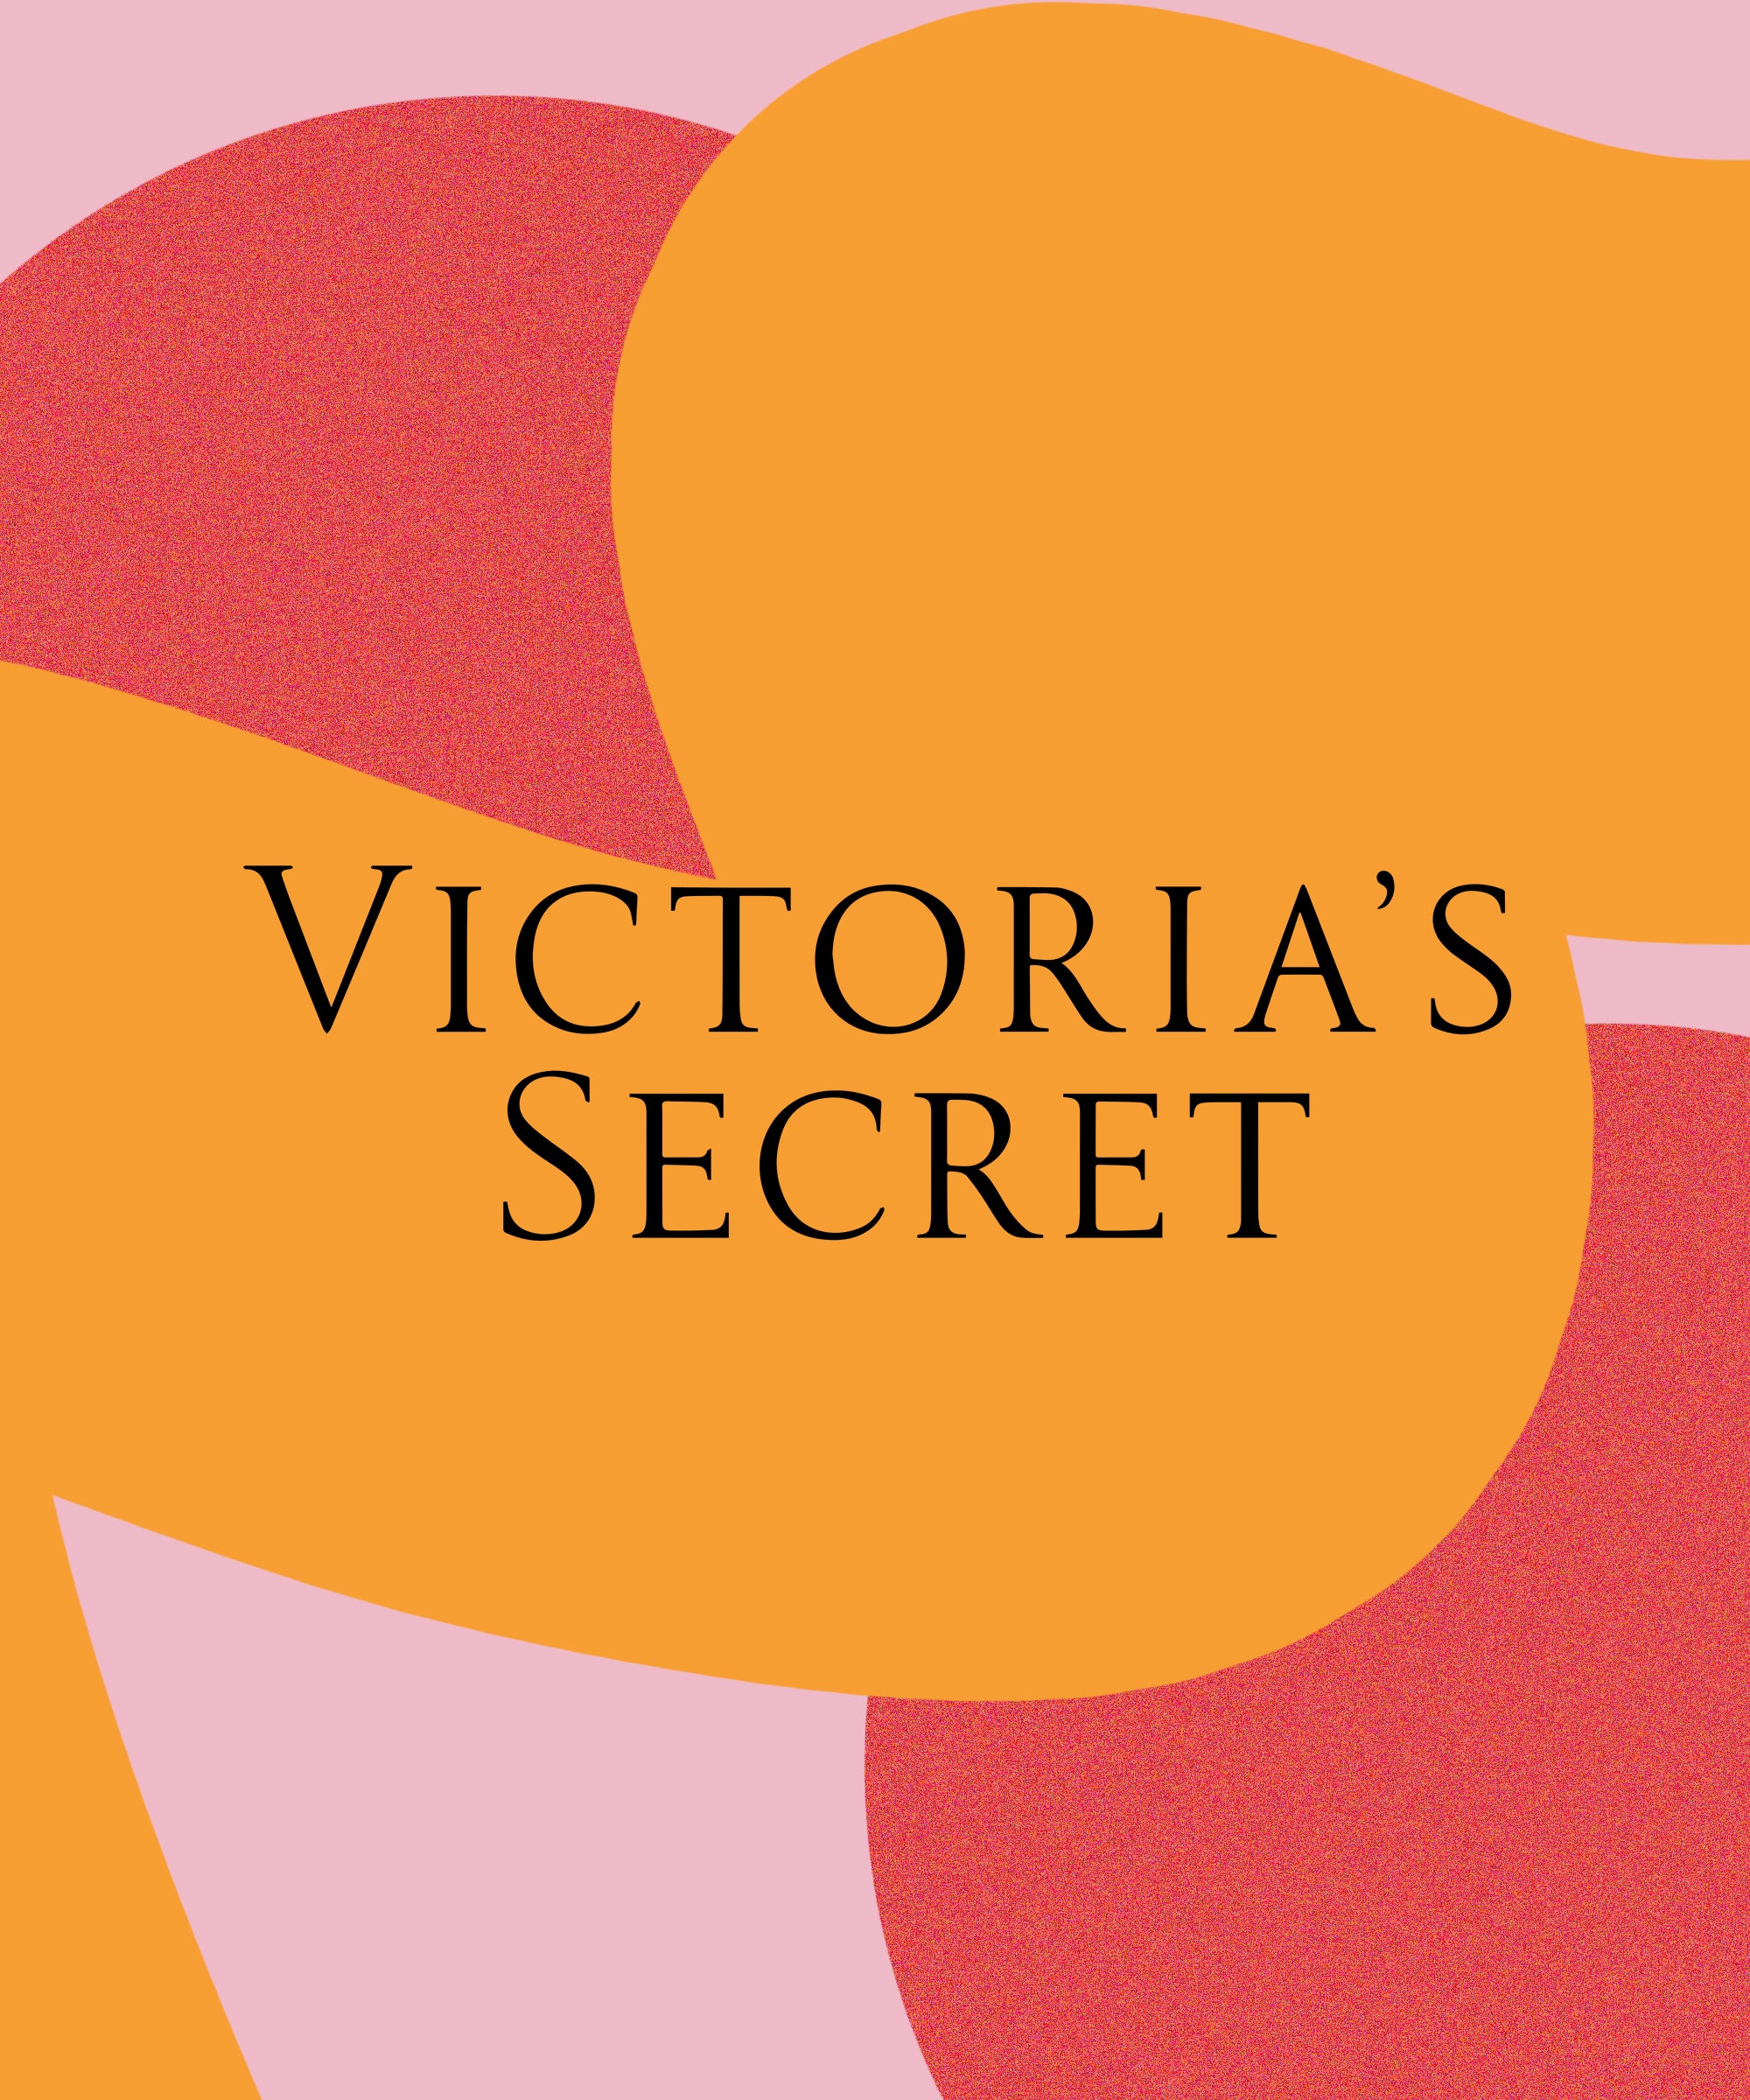 victorias secret logo wallpaper